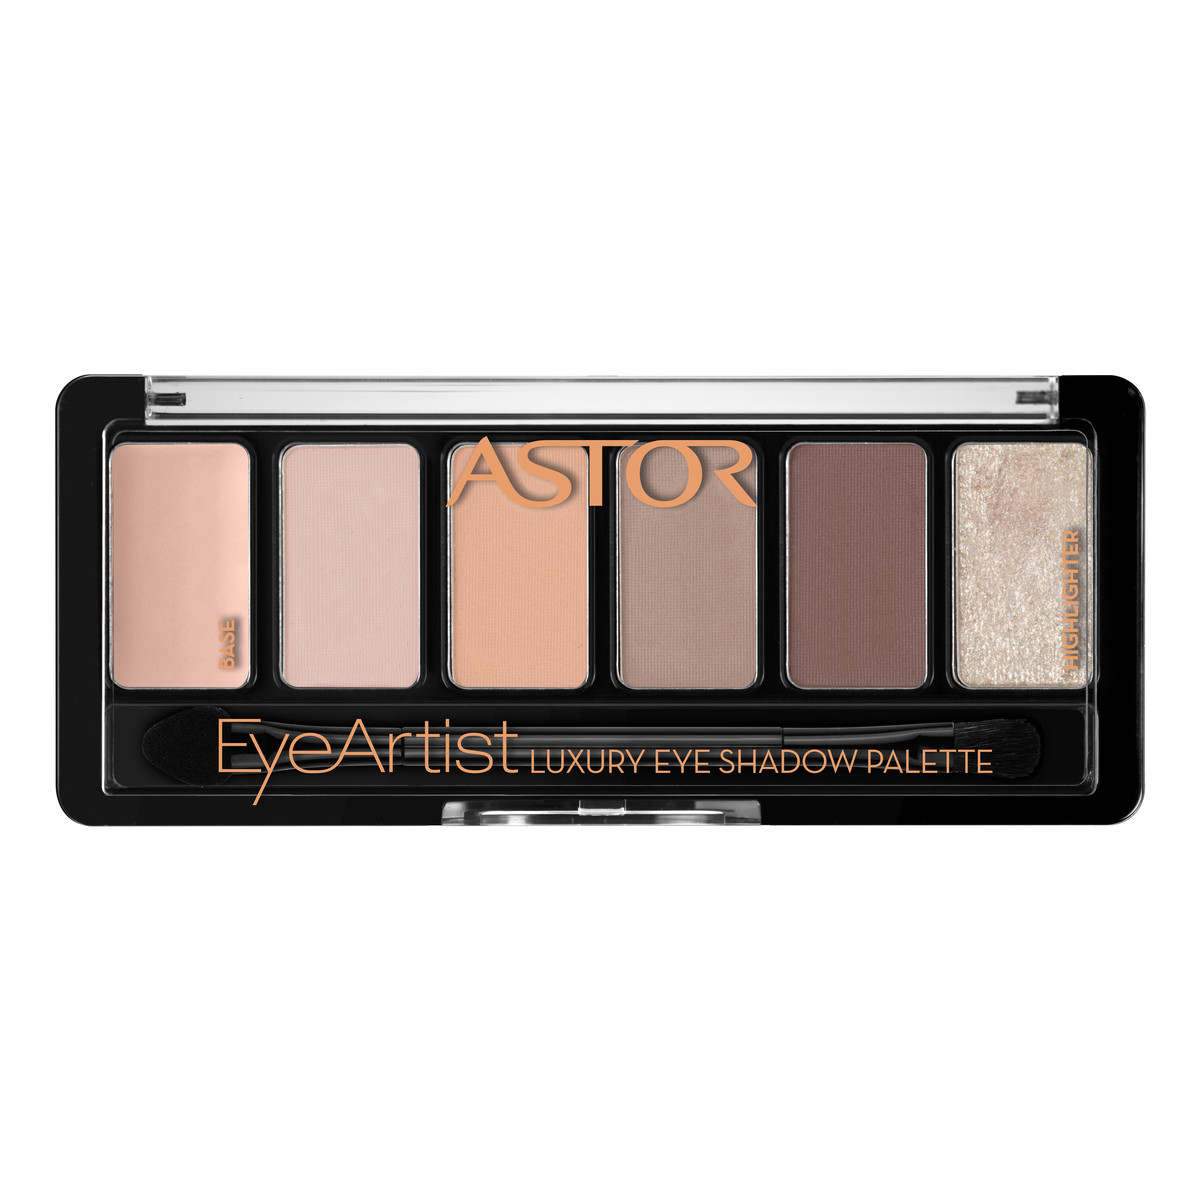 Astor Eye Artist Luxury Eye Shadow Palette Paleta cieni do powiek 5g